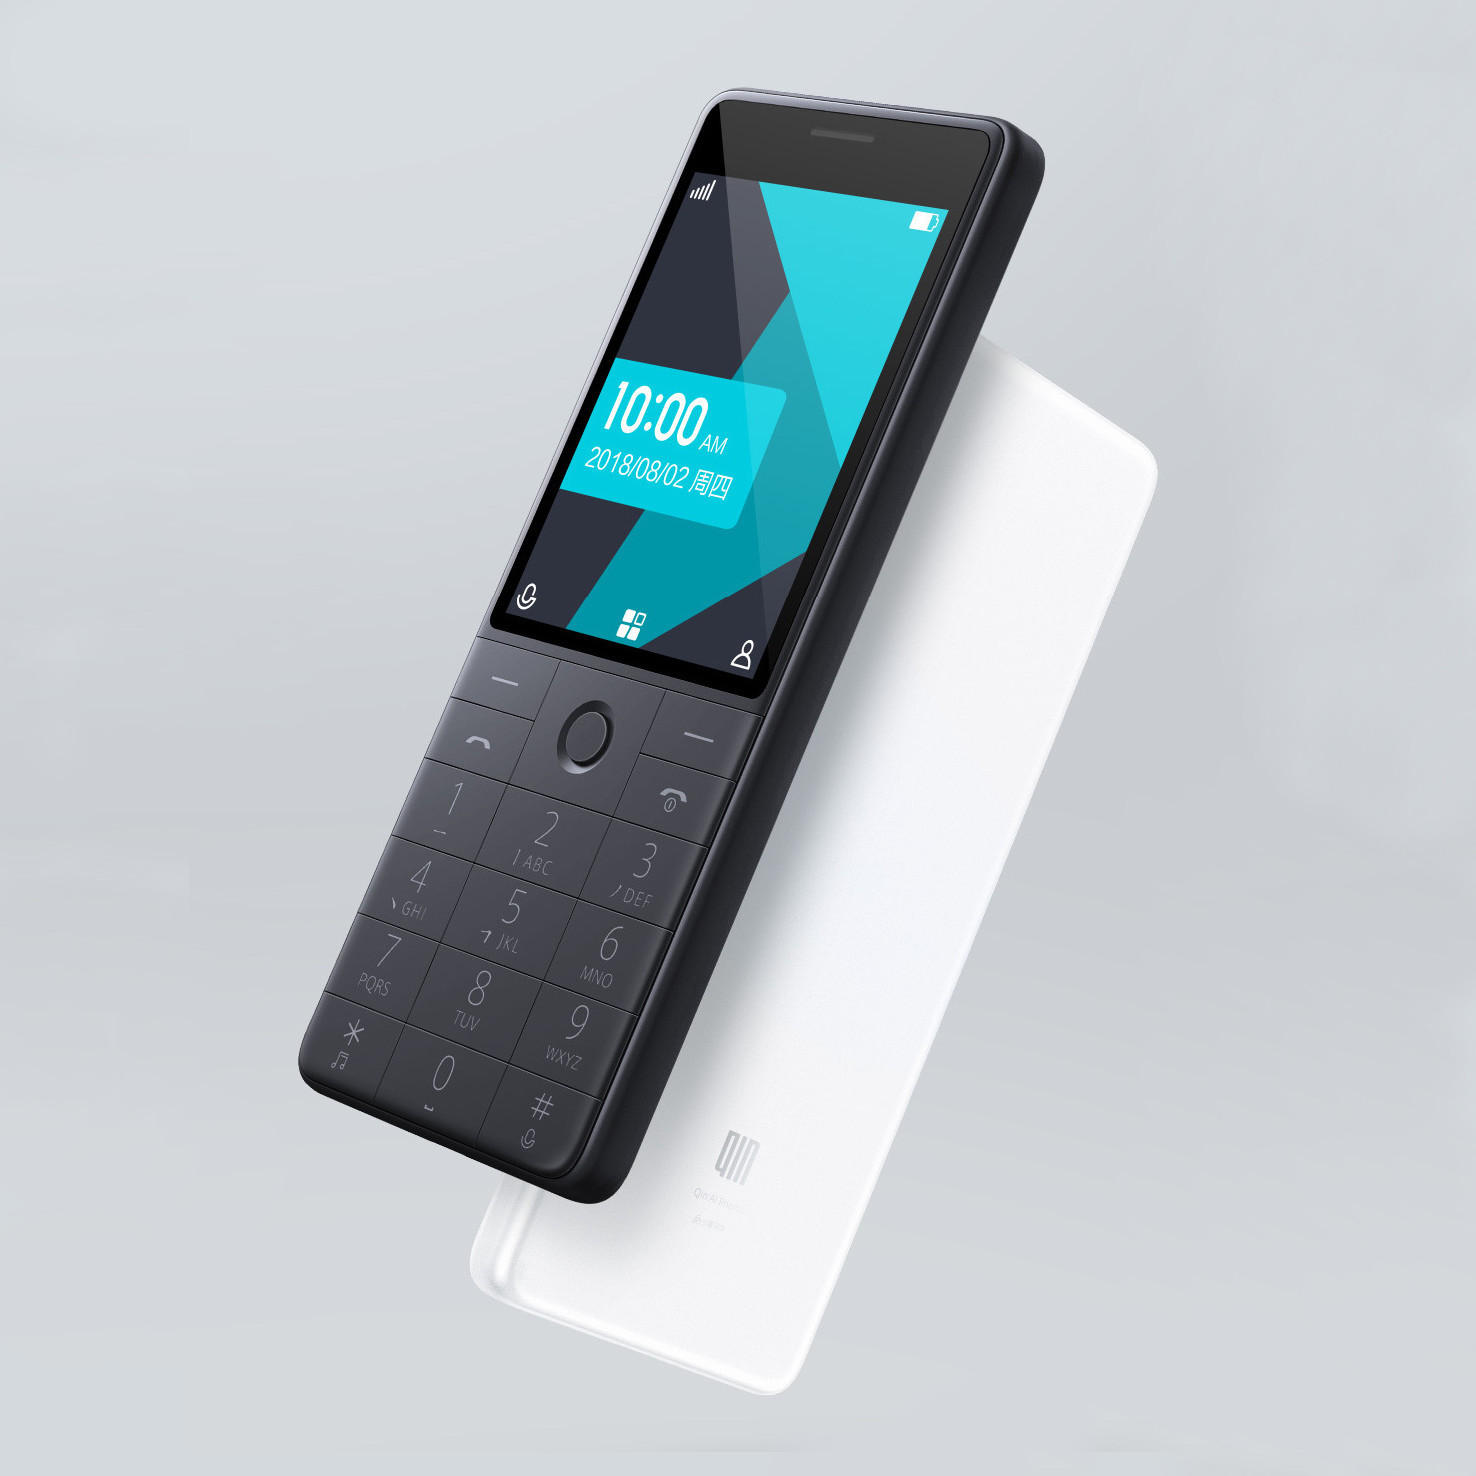 xiaomi qin 1s dual sim 4g feature phone with ai translator